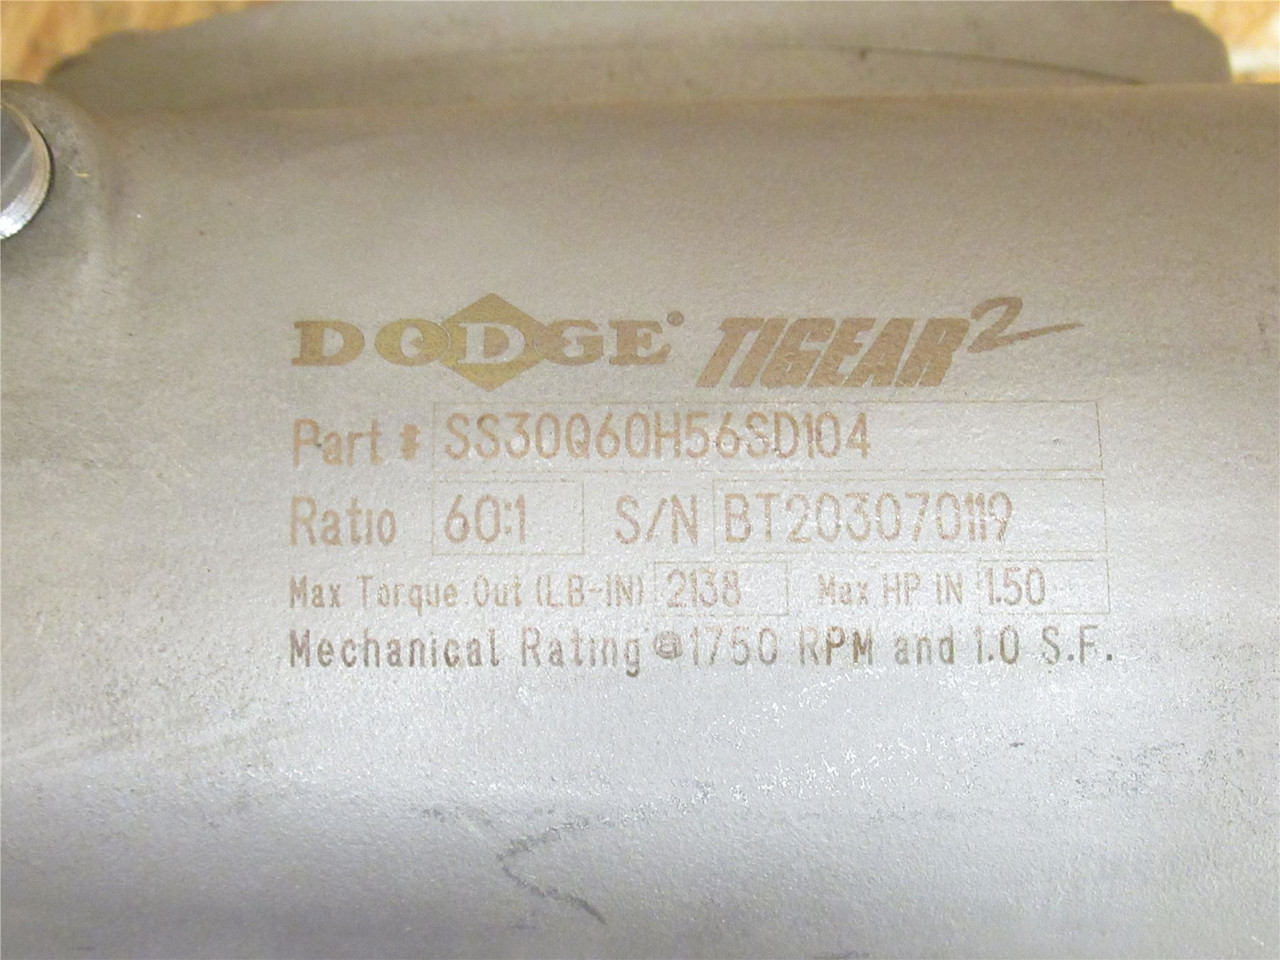 Dodge SS30Q60H56SD104; Gear Reducer RA; SS; 60:1 Ratio; 1.5HP